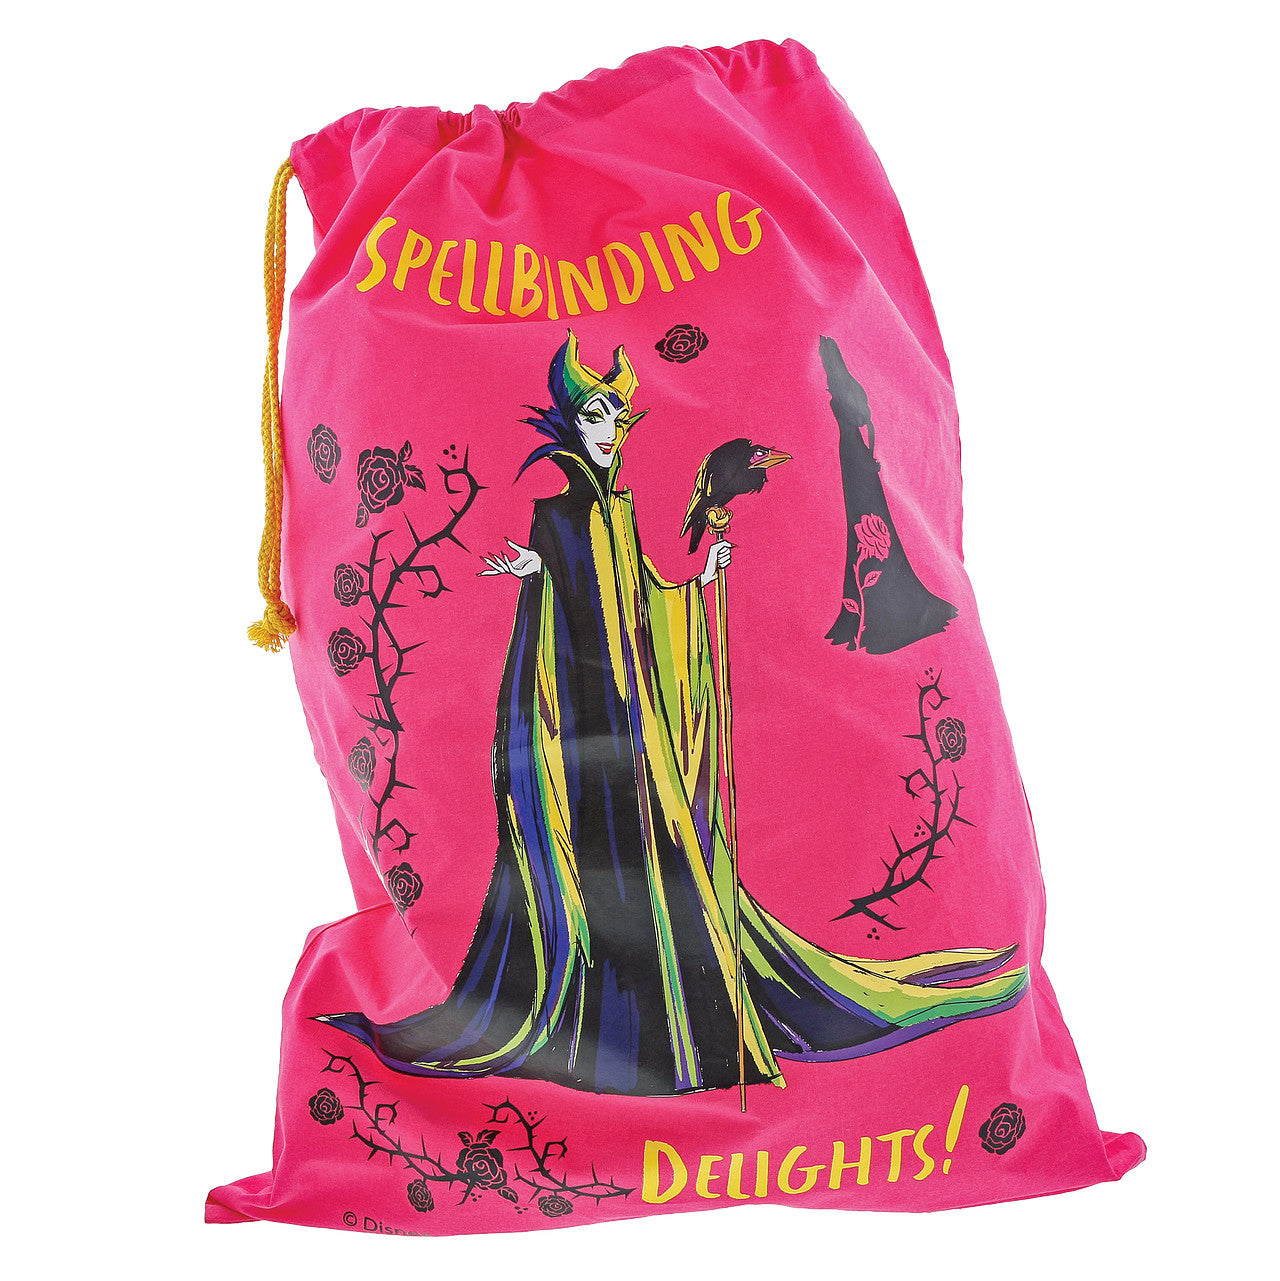 Spellbinding Delights - Maleficent Sack